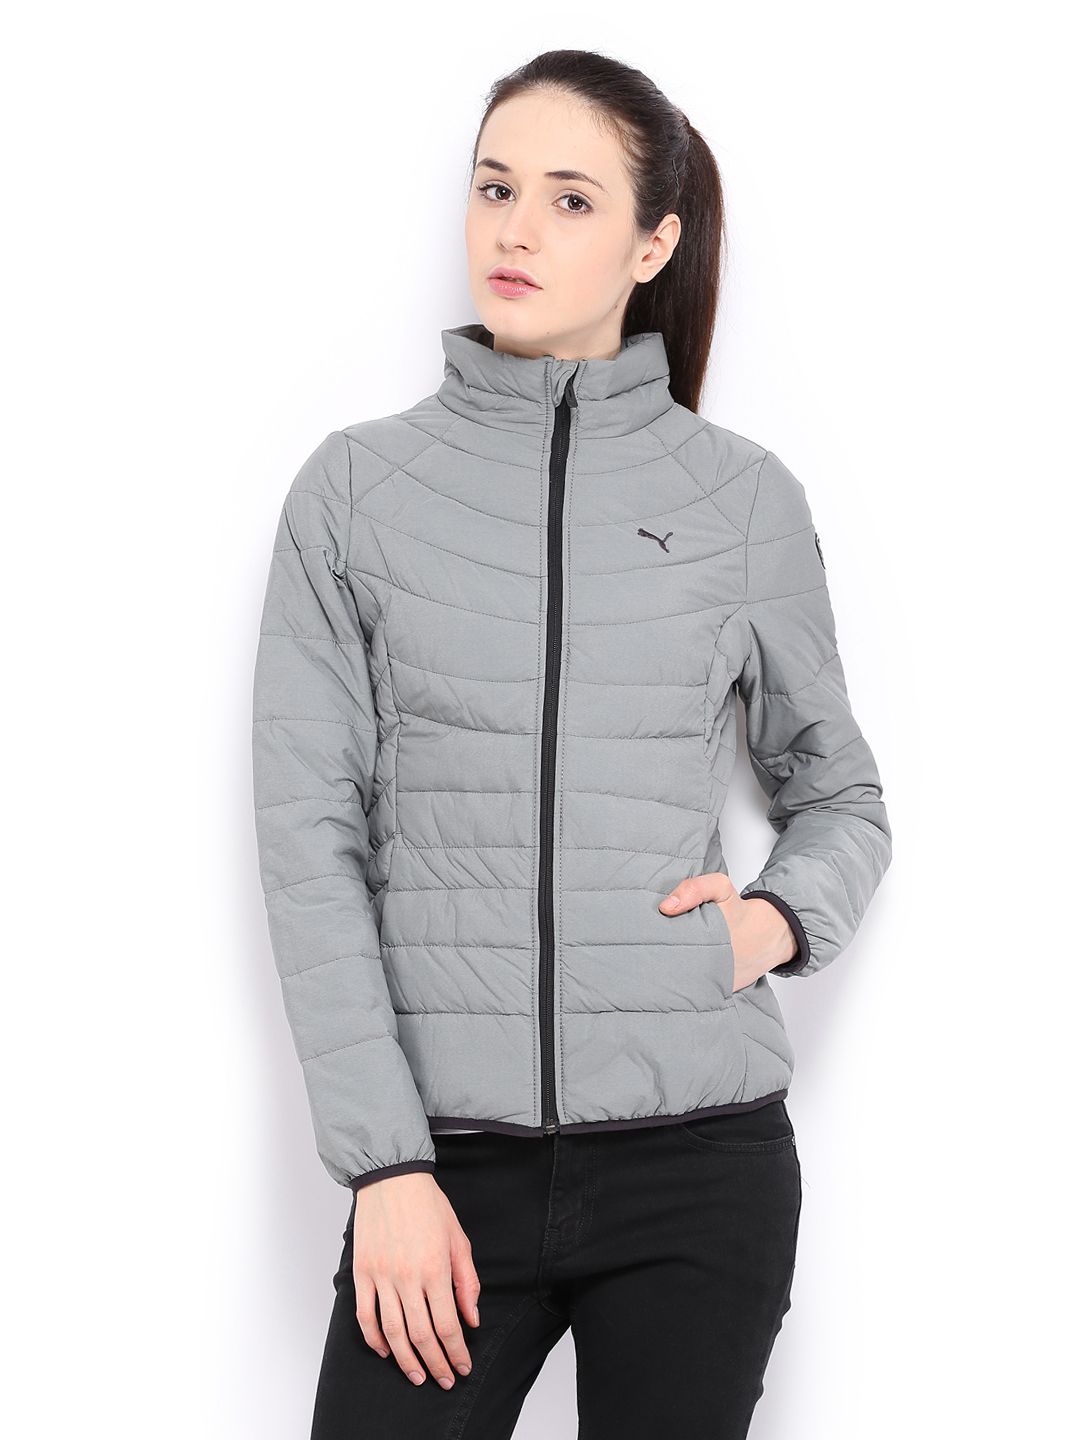 puma jacket womens price Sale,up to 35 